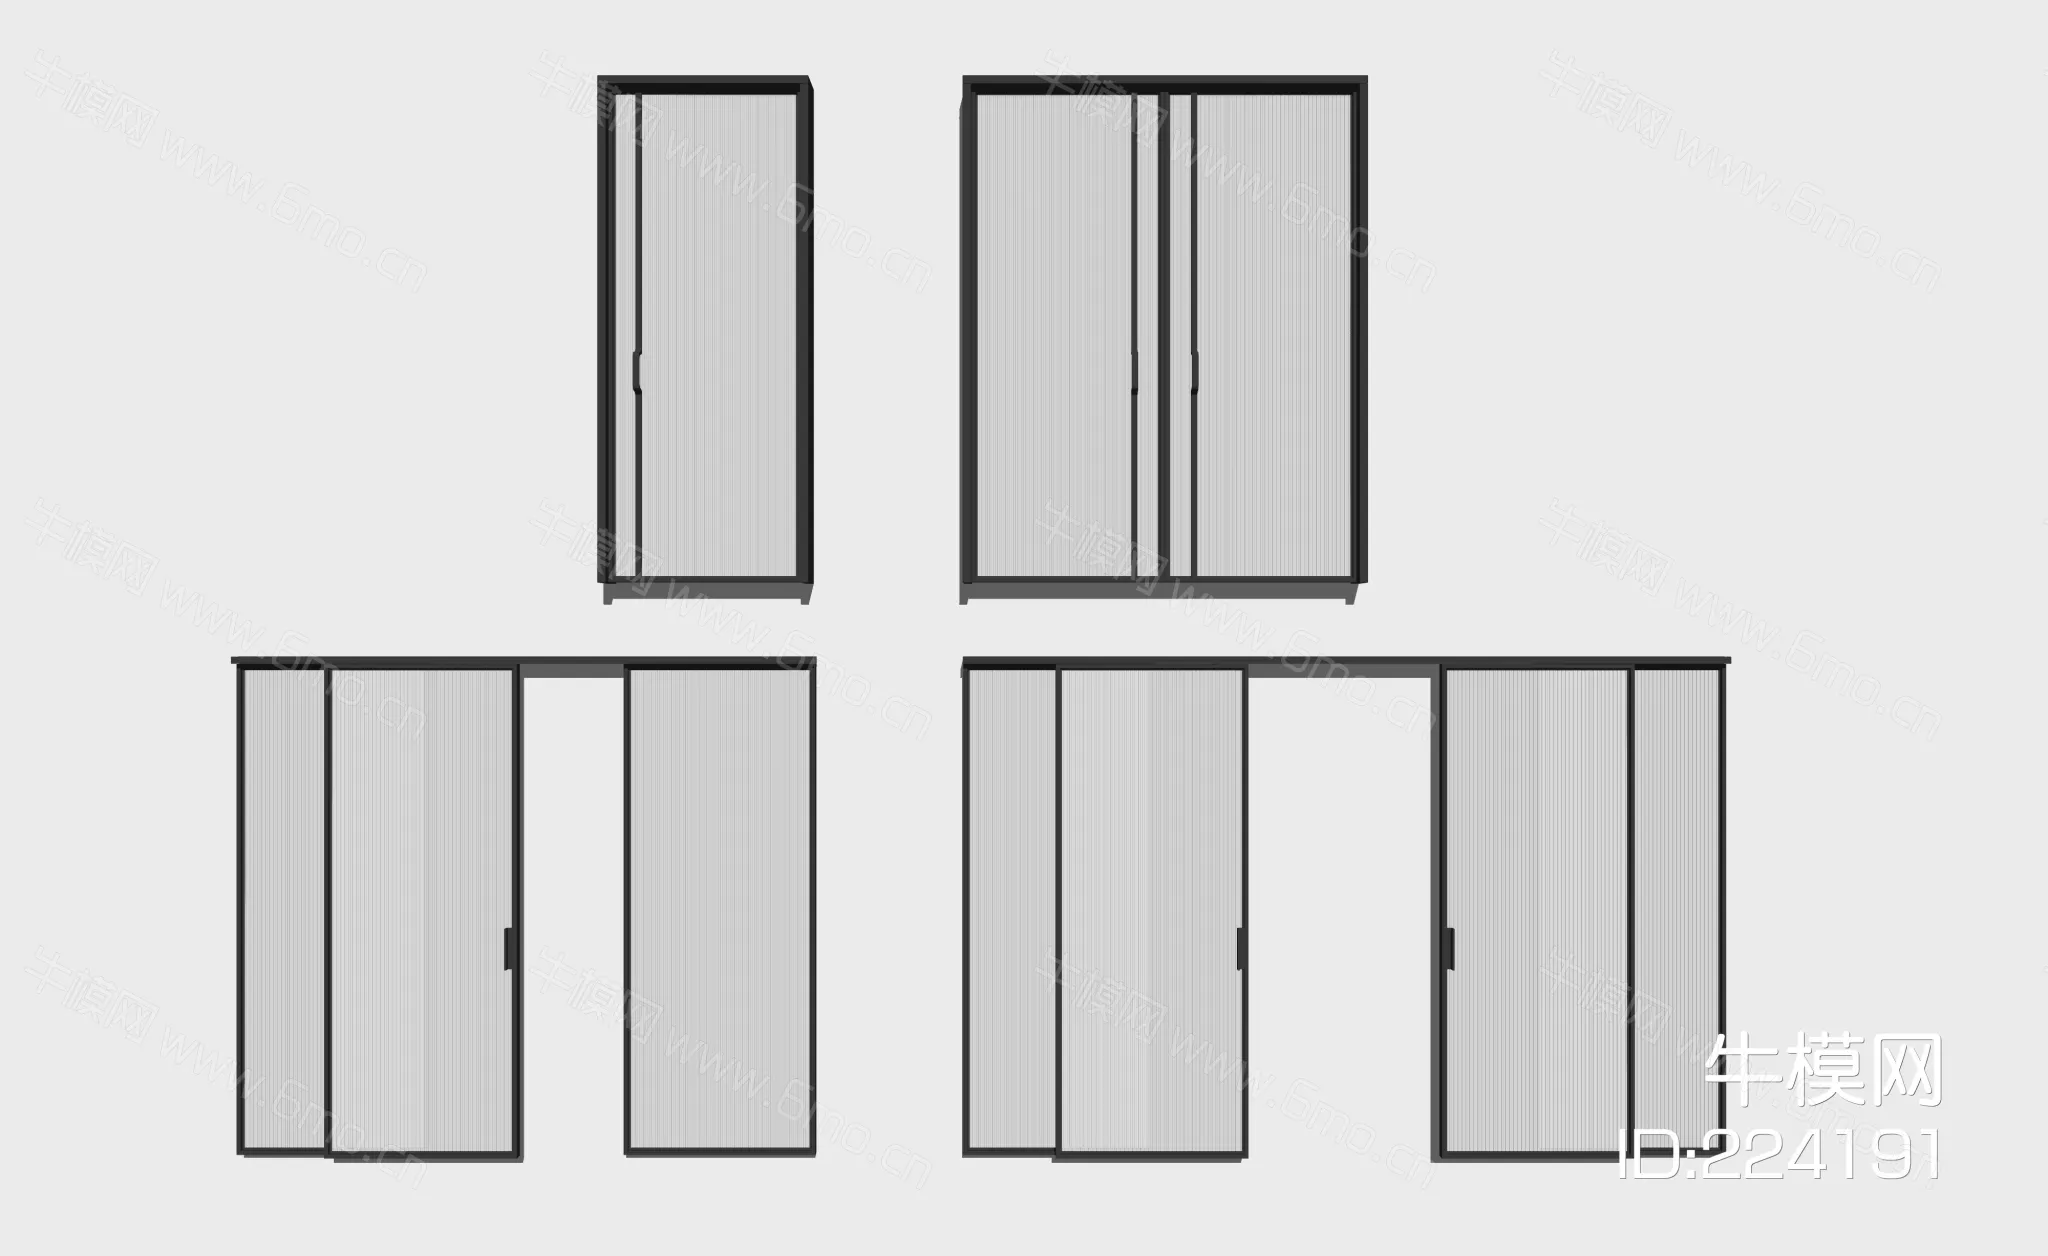 MODERN DOOR AND WINDOWS - SKETCHUP 3D MODEL - ENSCAPE - 224191